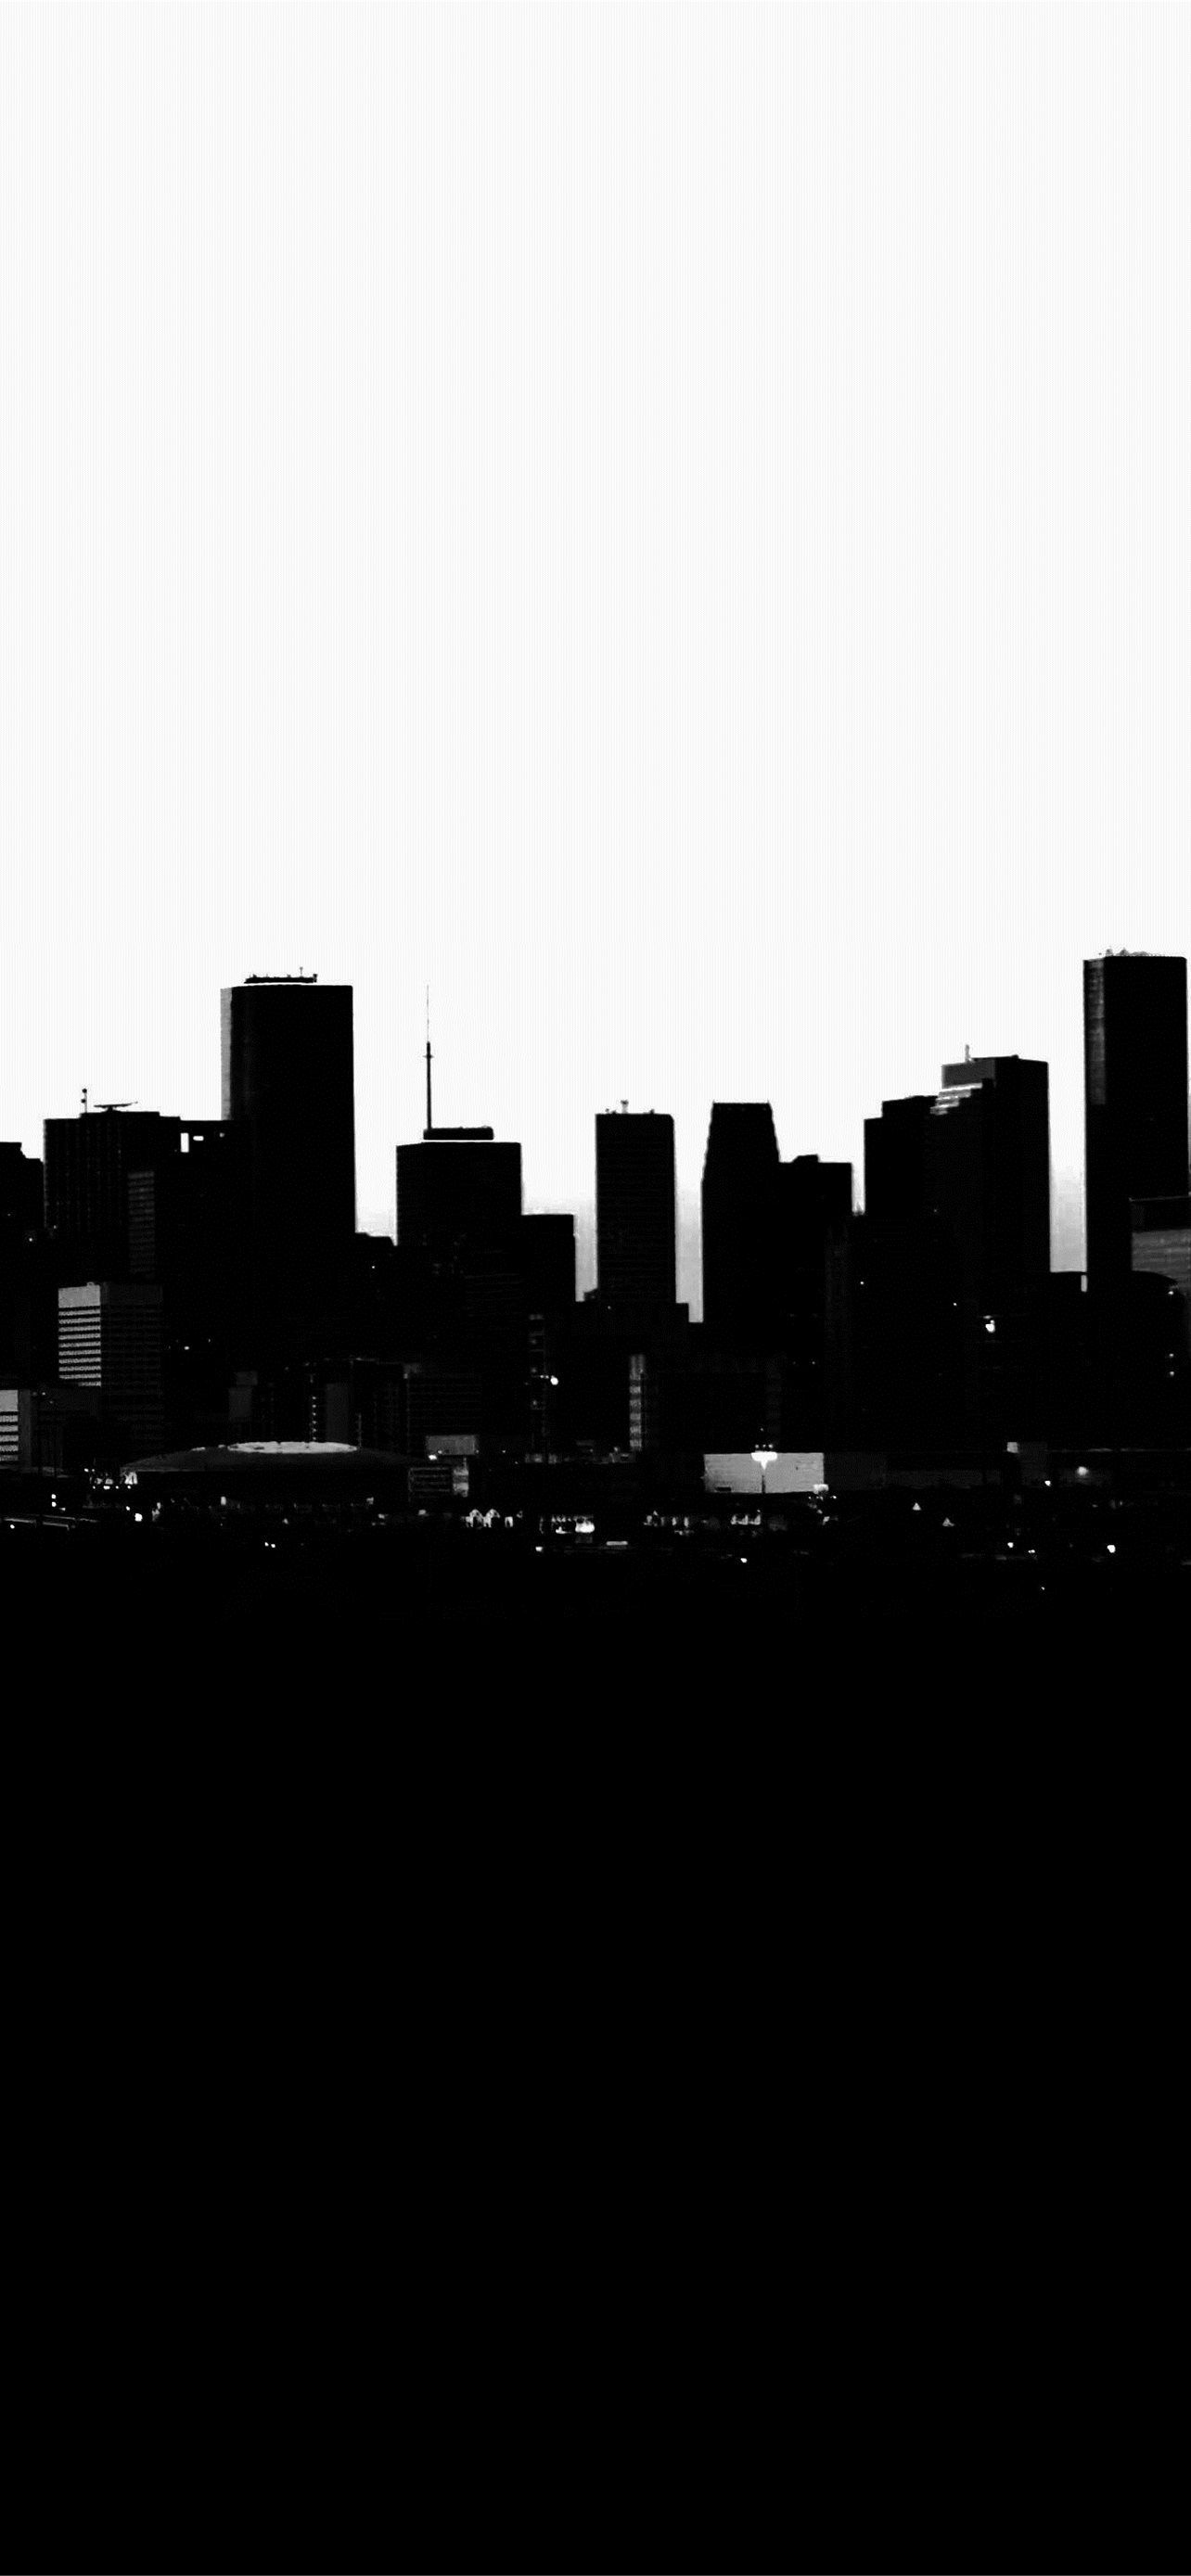 A black and white photo of a city skyline - Texas